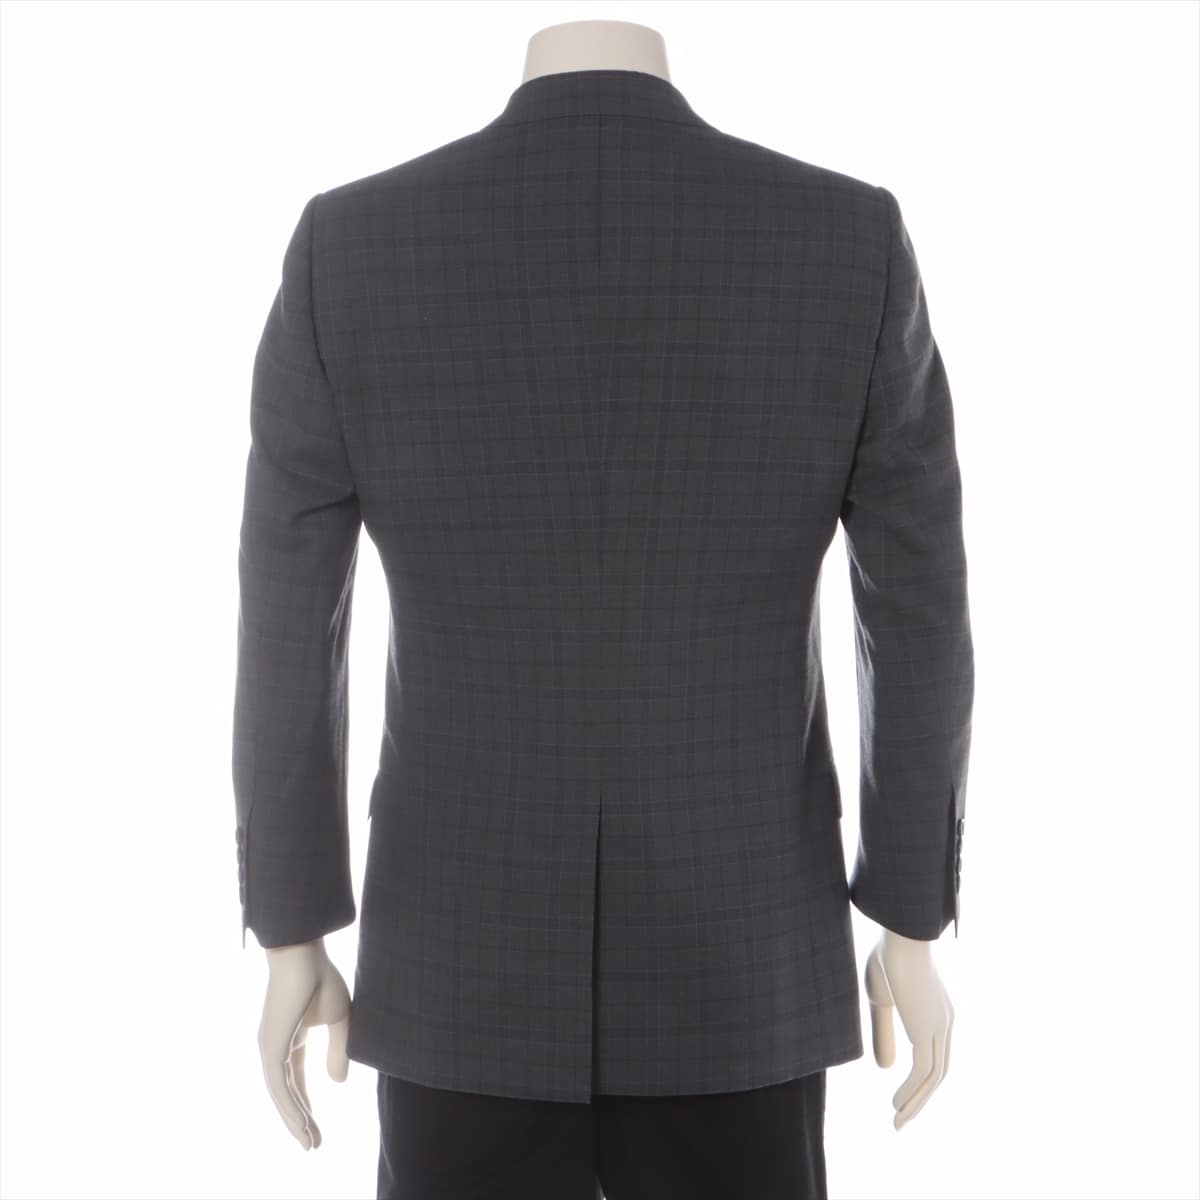 Dolce & Gabbana Wool Tailored jacket 46 Men's Grey